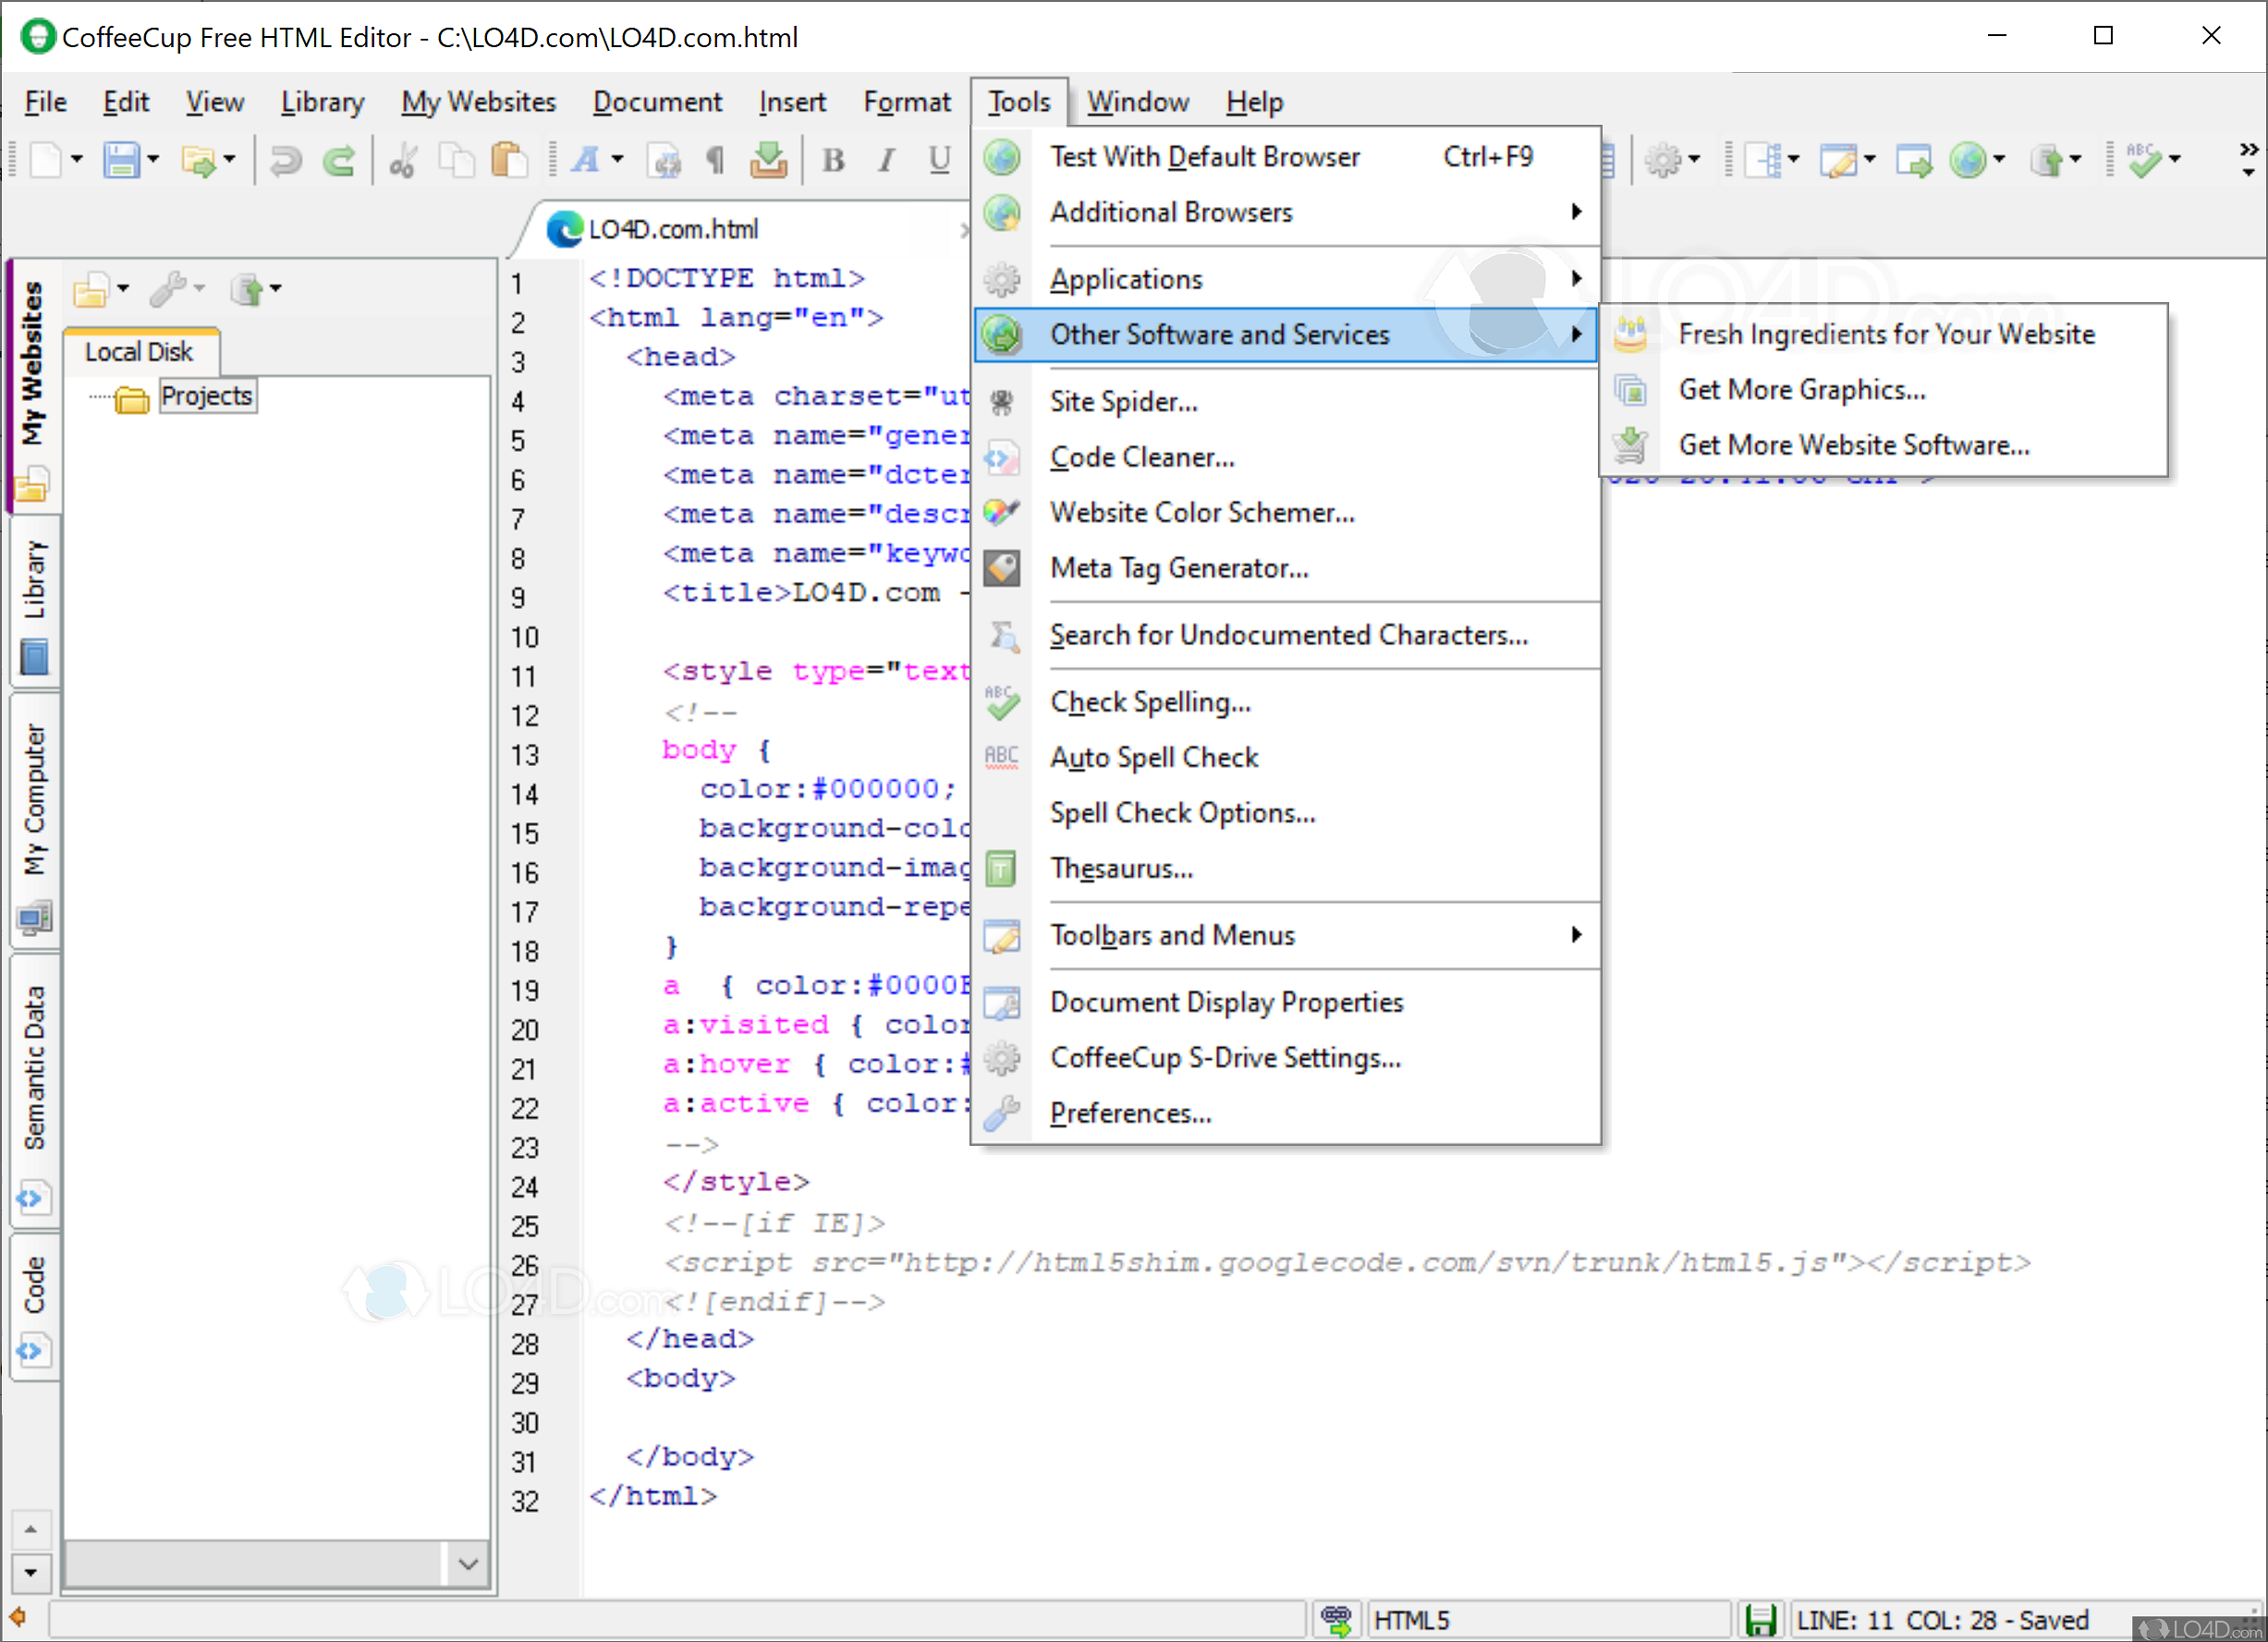 html editor free download for windows 7 64 bit